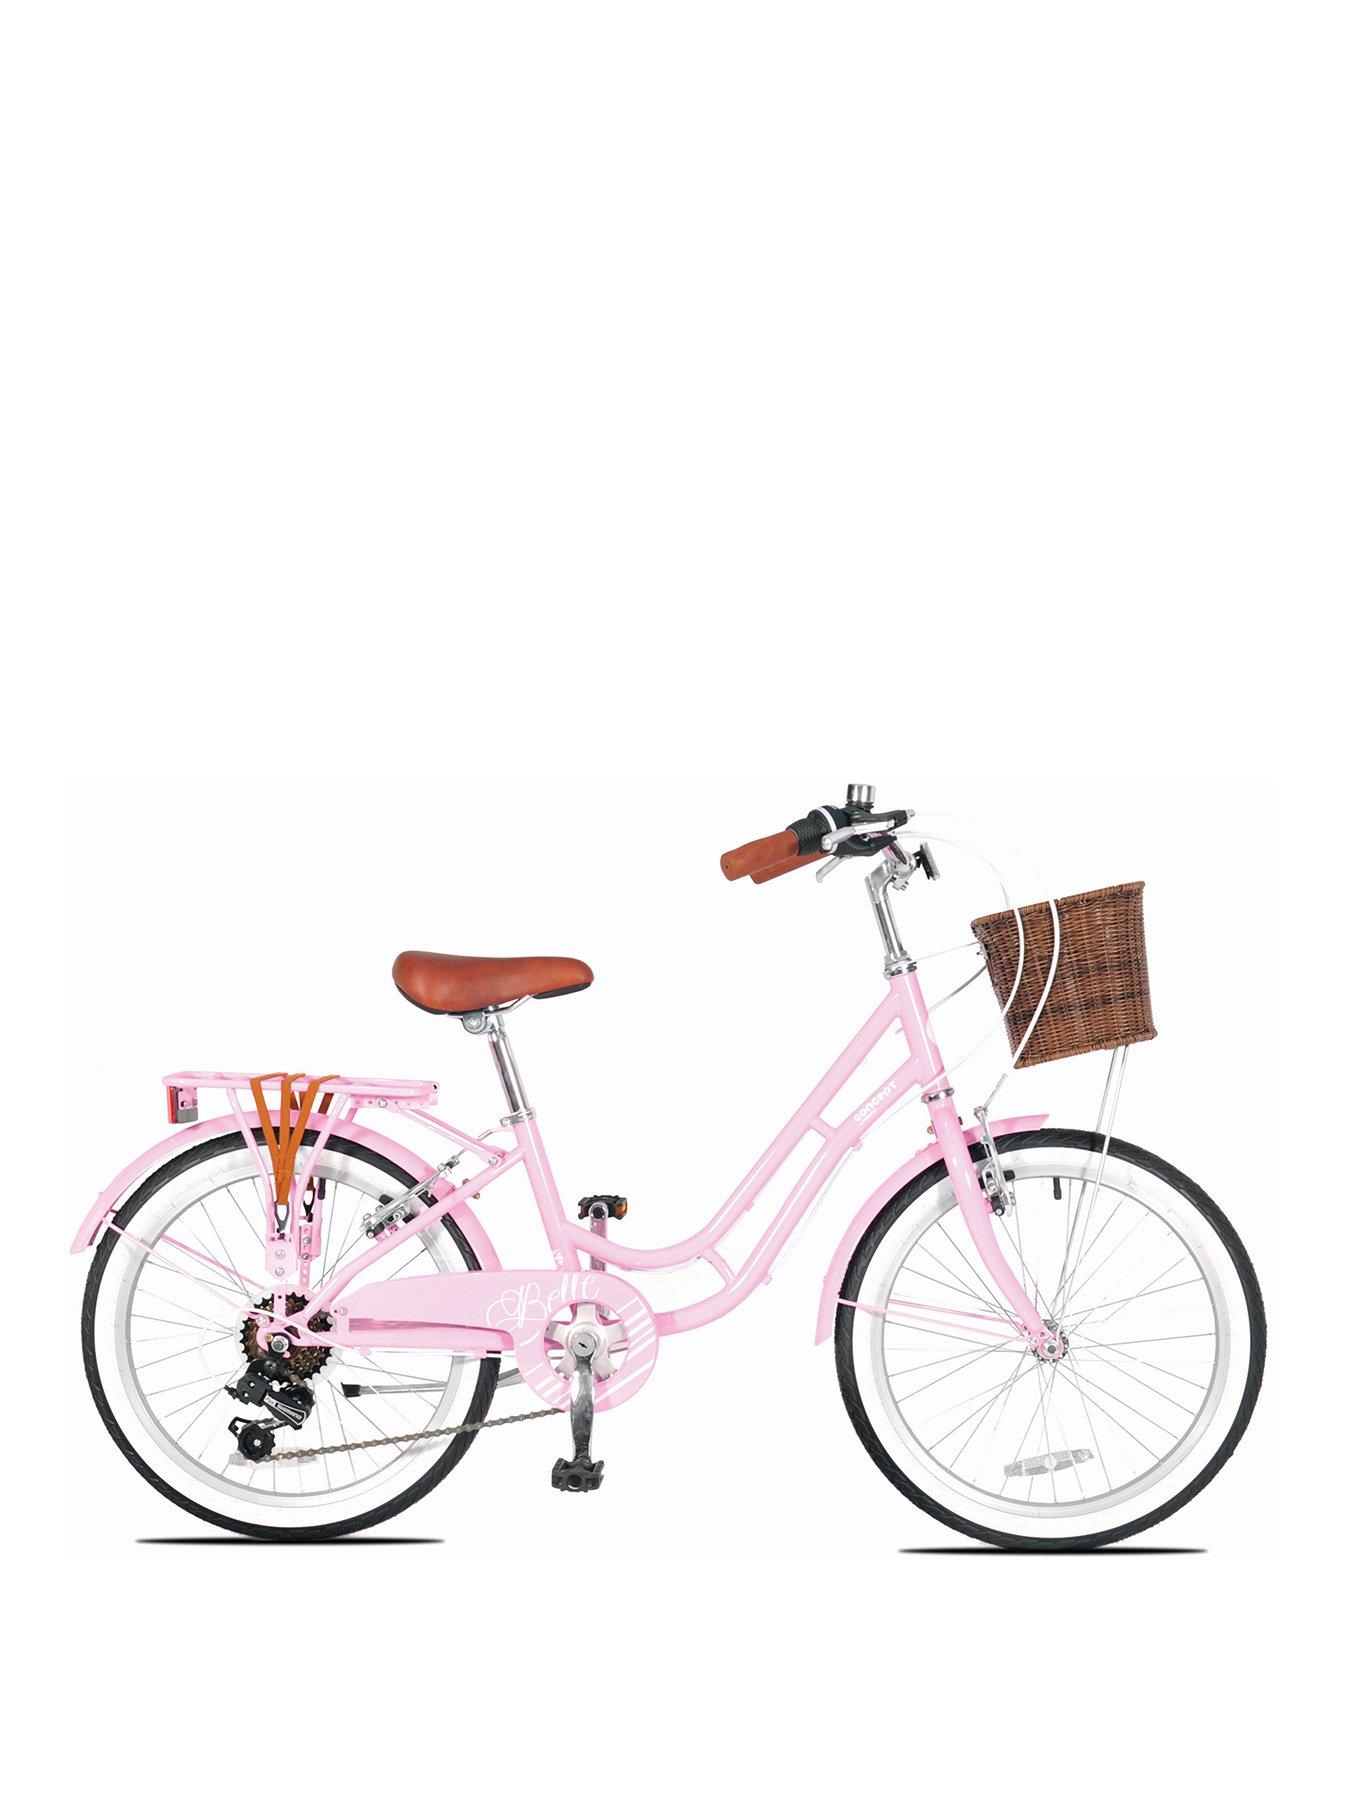 girls pink 20 inch bike